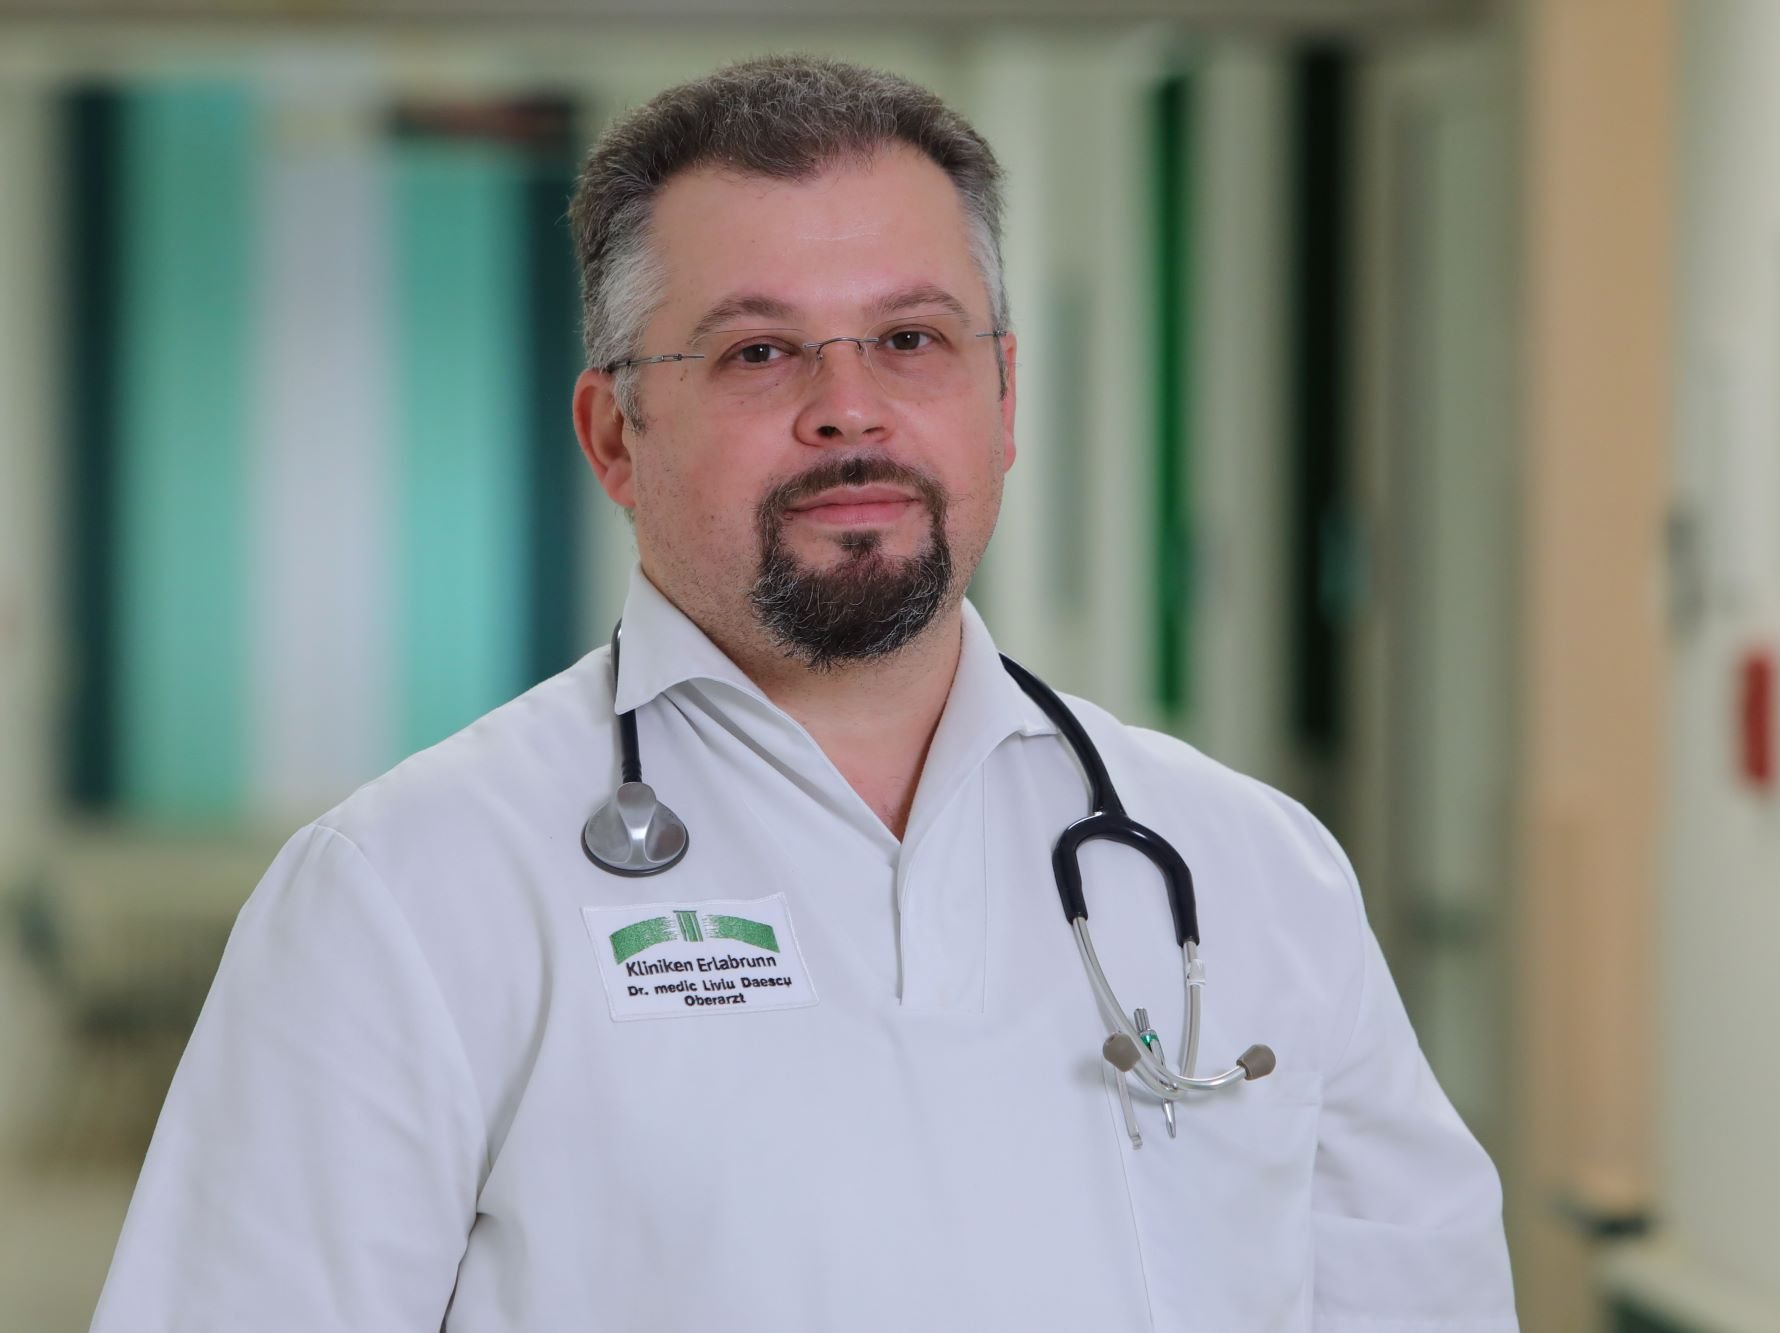 Oberarzt Daescu Kliniken Erlabrunn Kardiologie